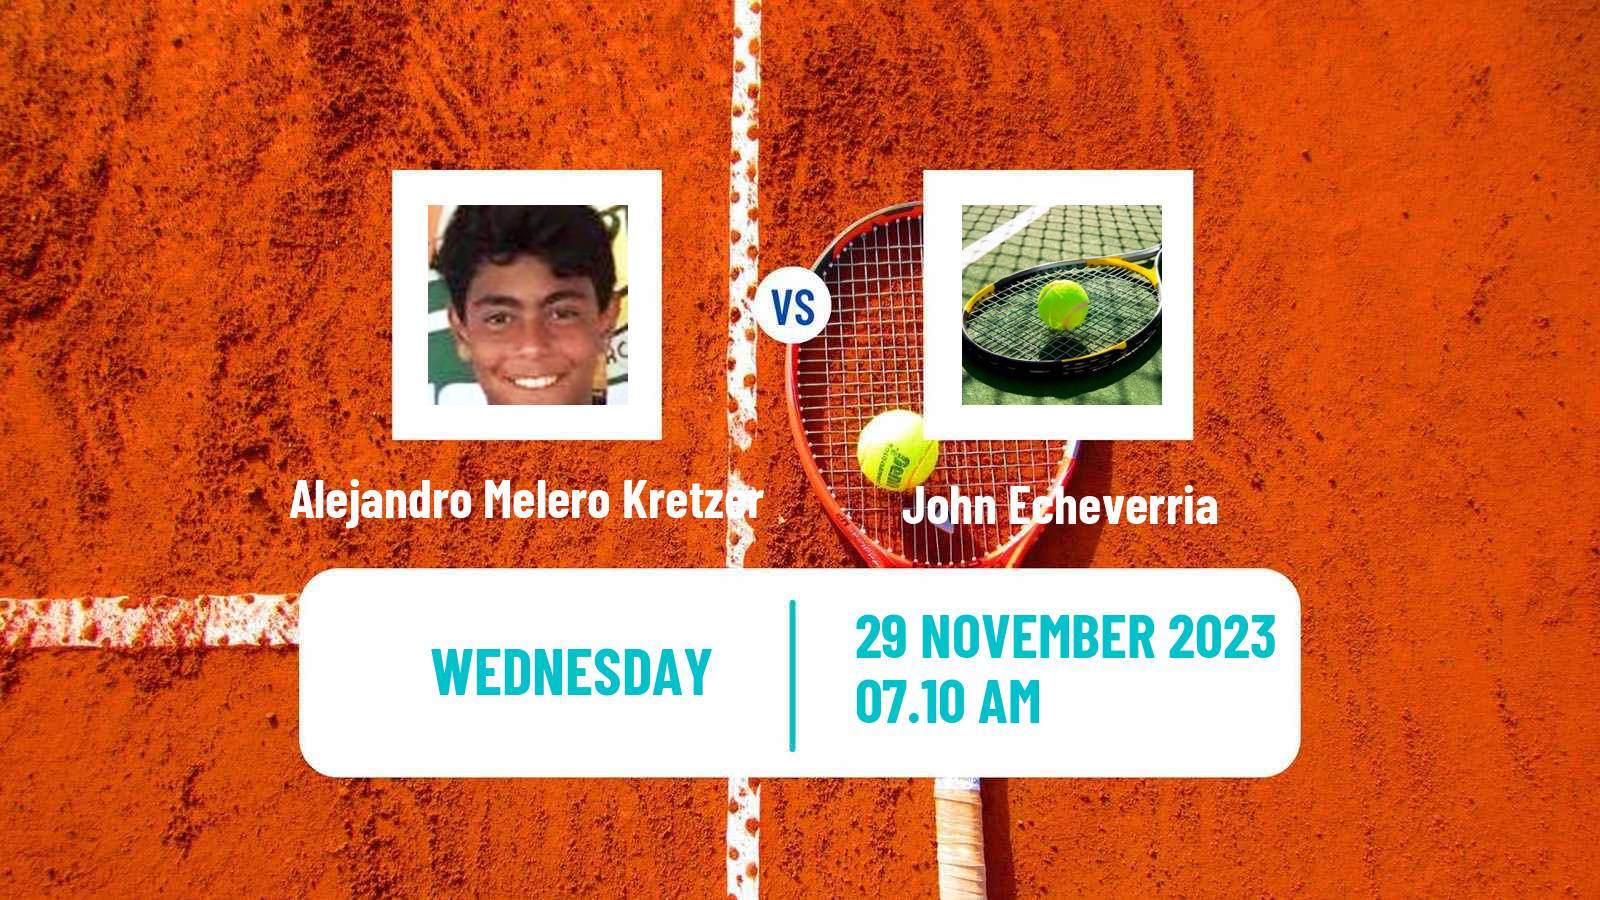 Tennis ITF M15 Madrid 2 Men Alejandro Melero Kretzer - John Echeverria